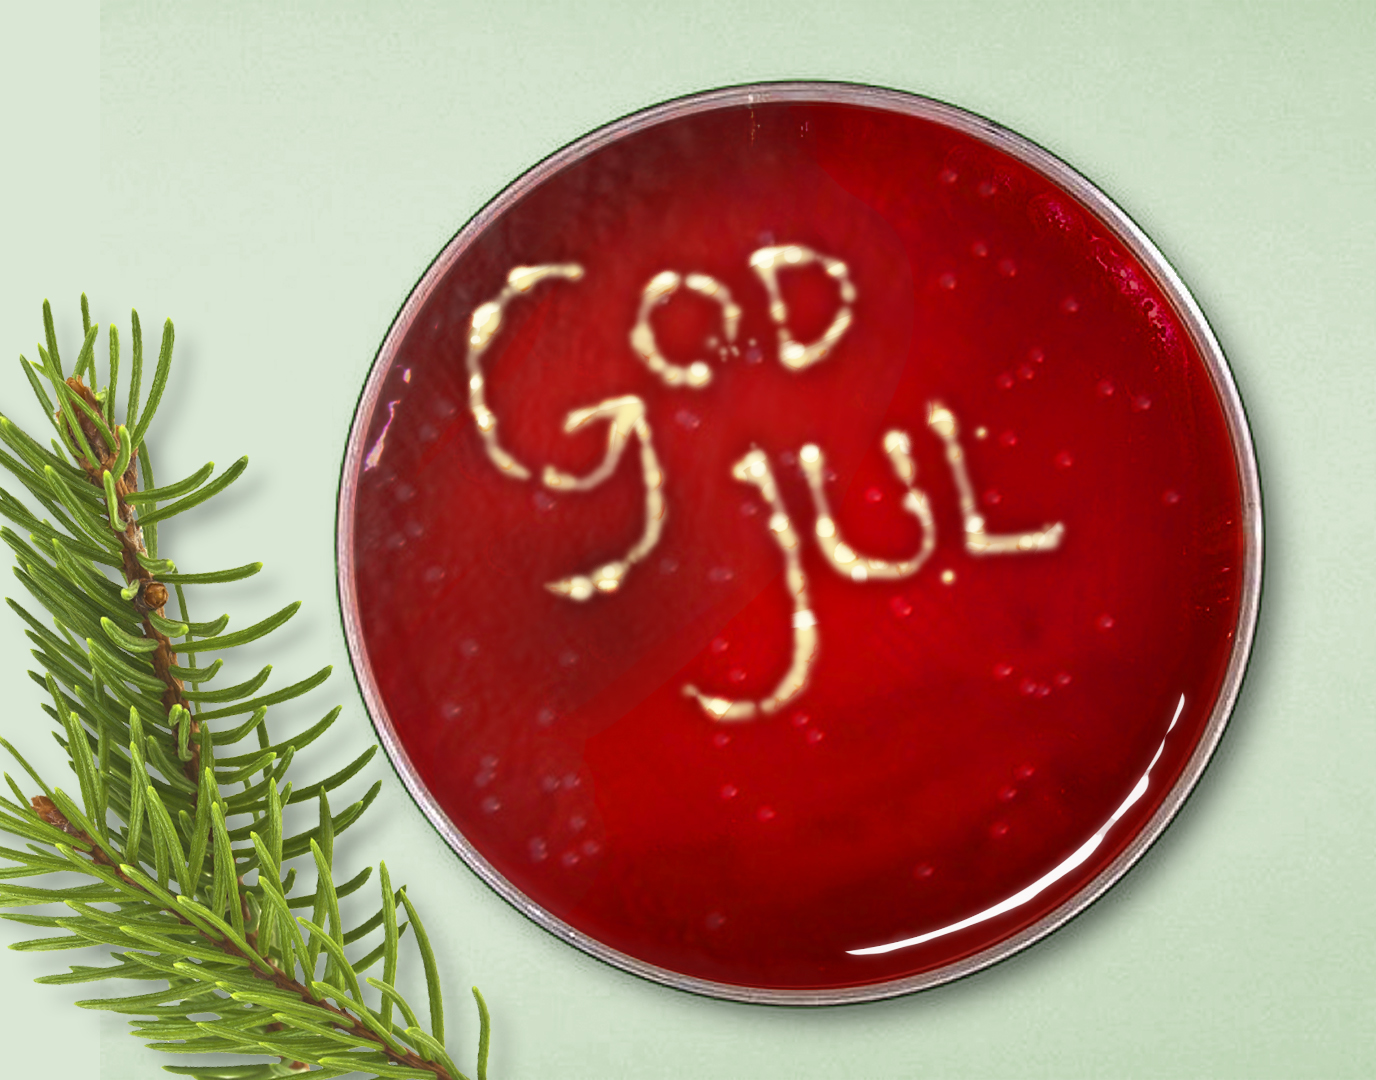 Merry Christmas greeting written in agar 